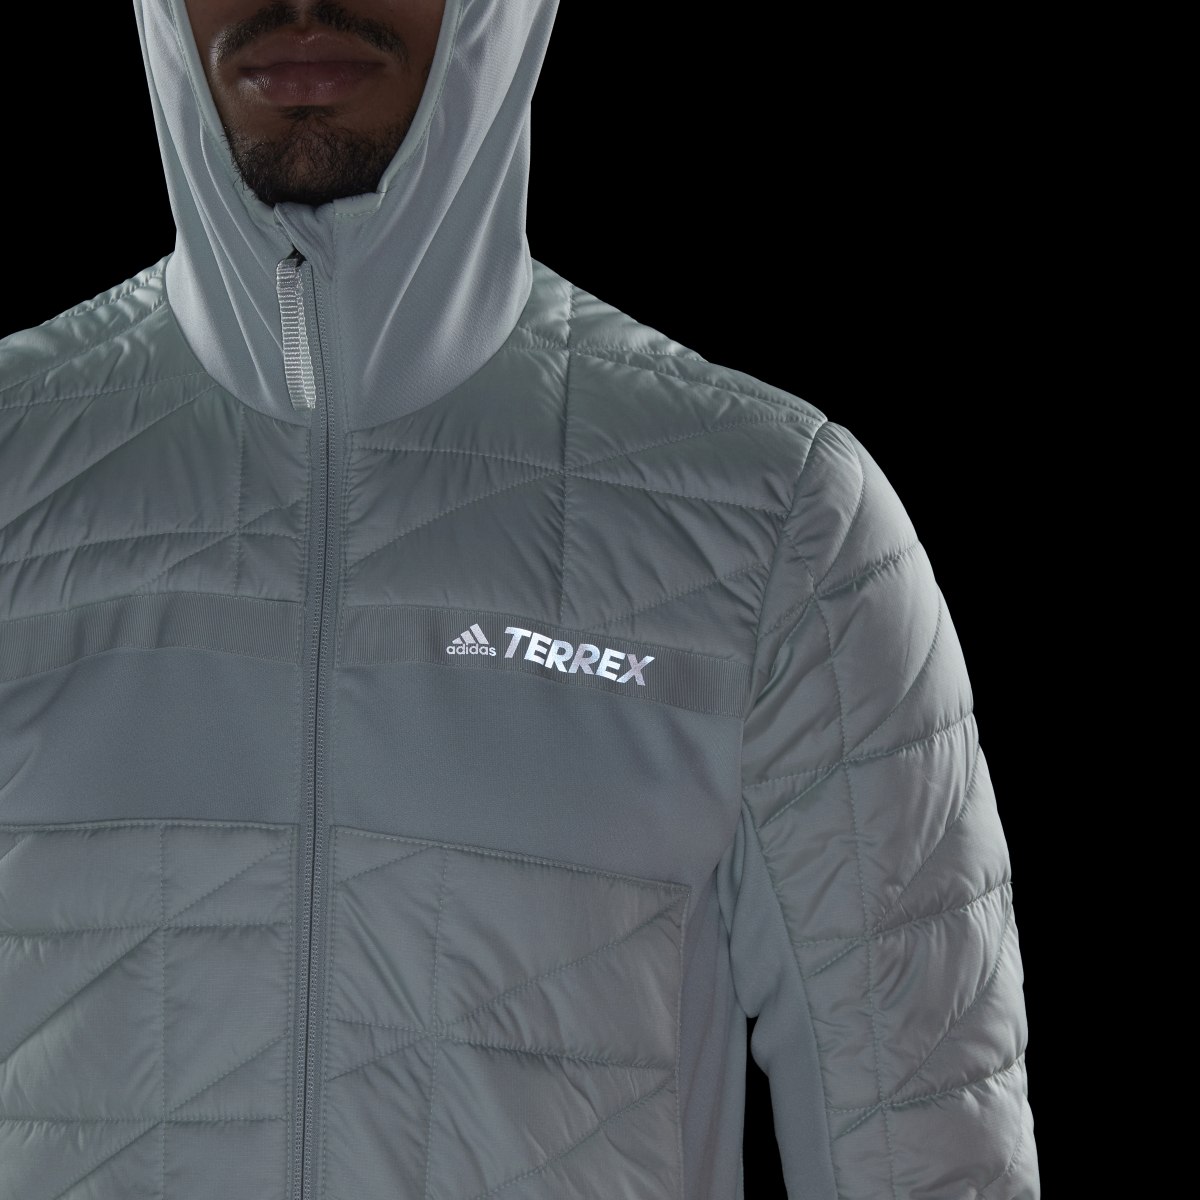 Adidas Terrex Multi Hybrid Insulated Jacket. 9